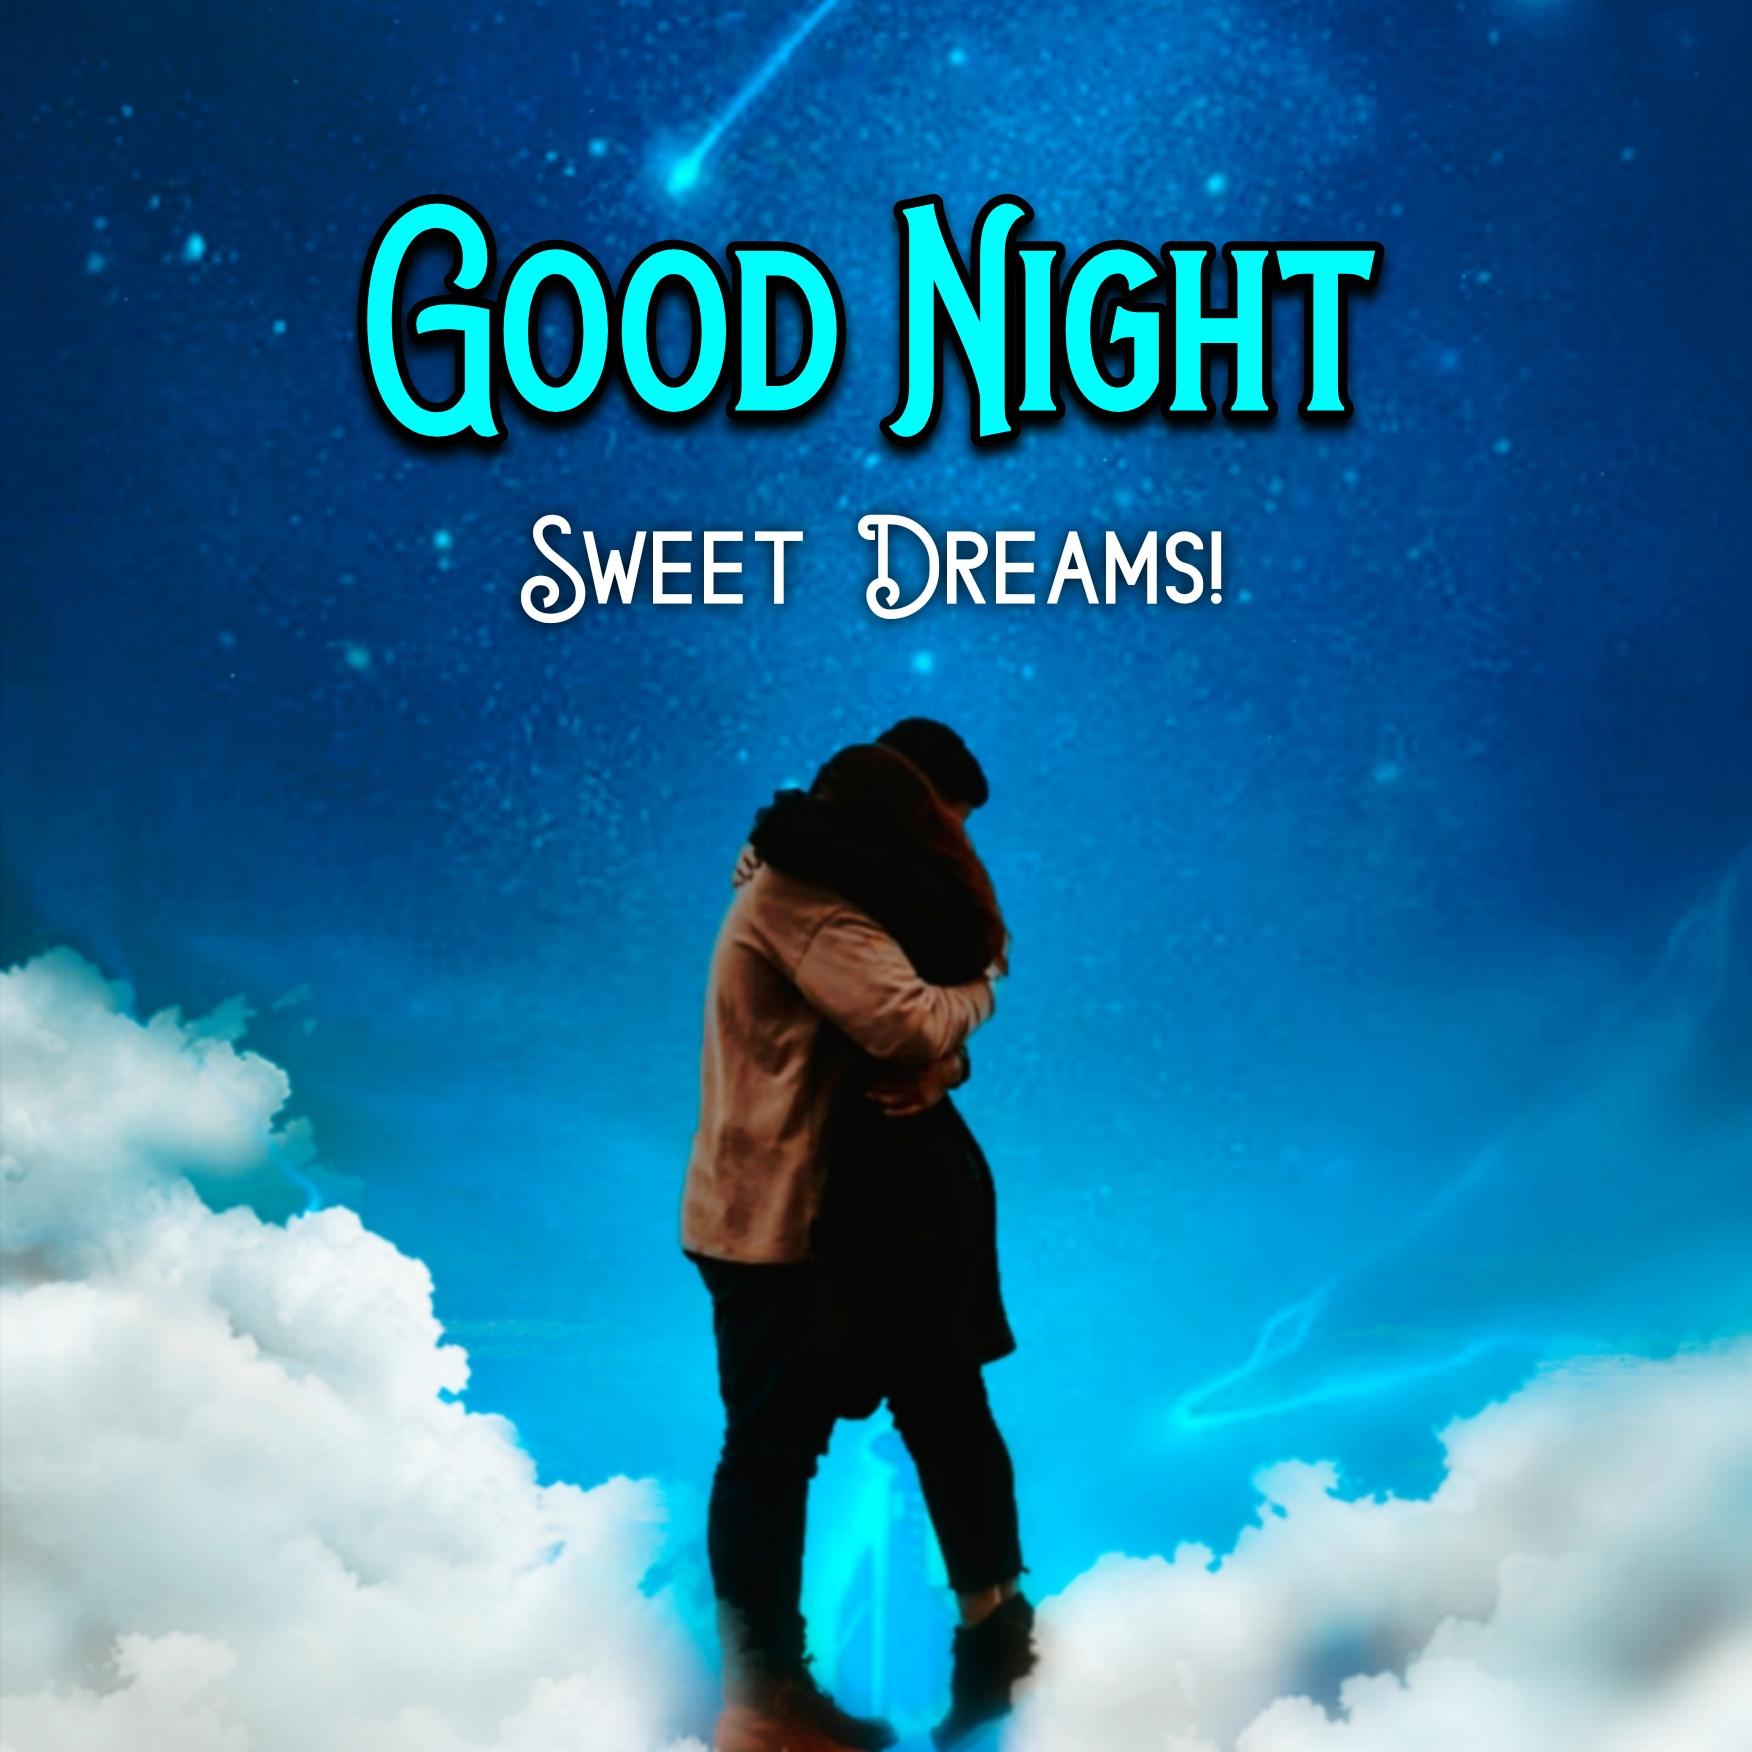 Romantic Good Night Sweet Dreams Images